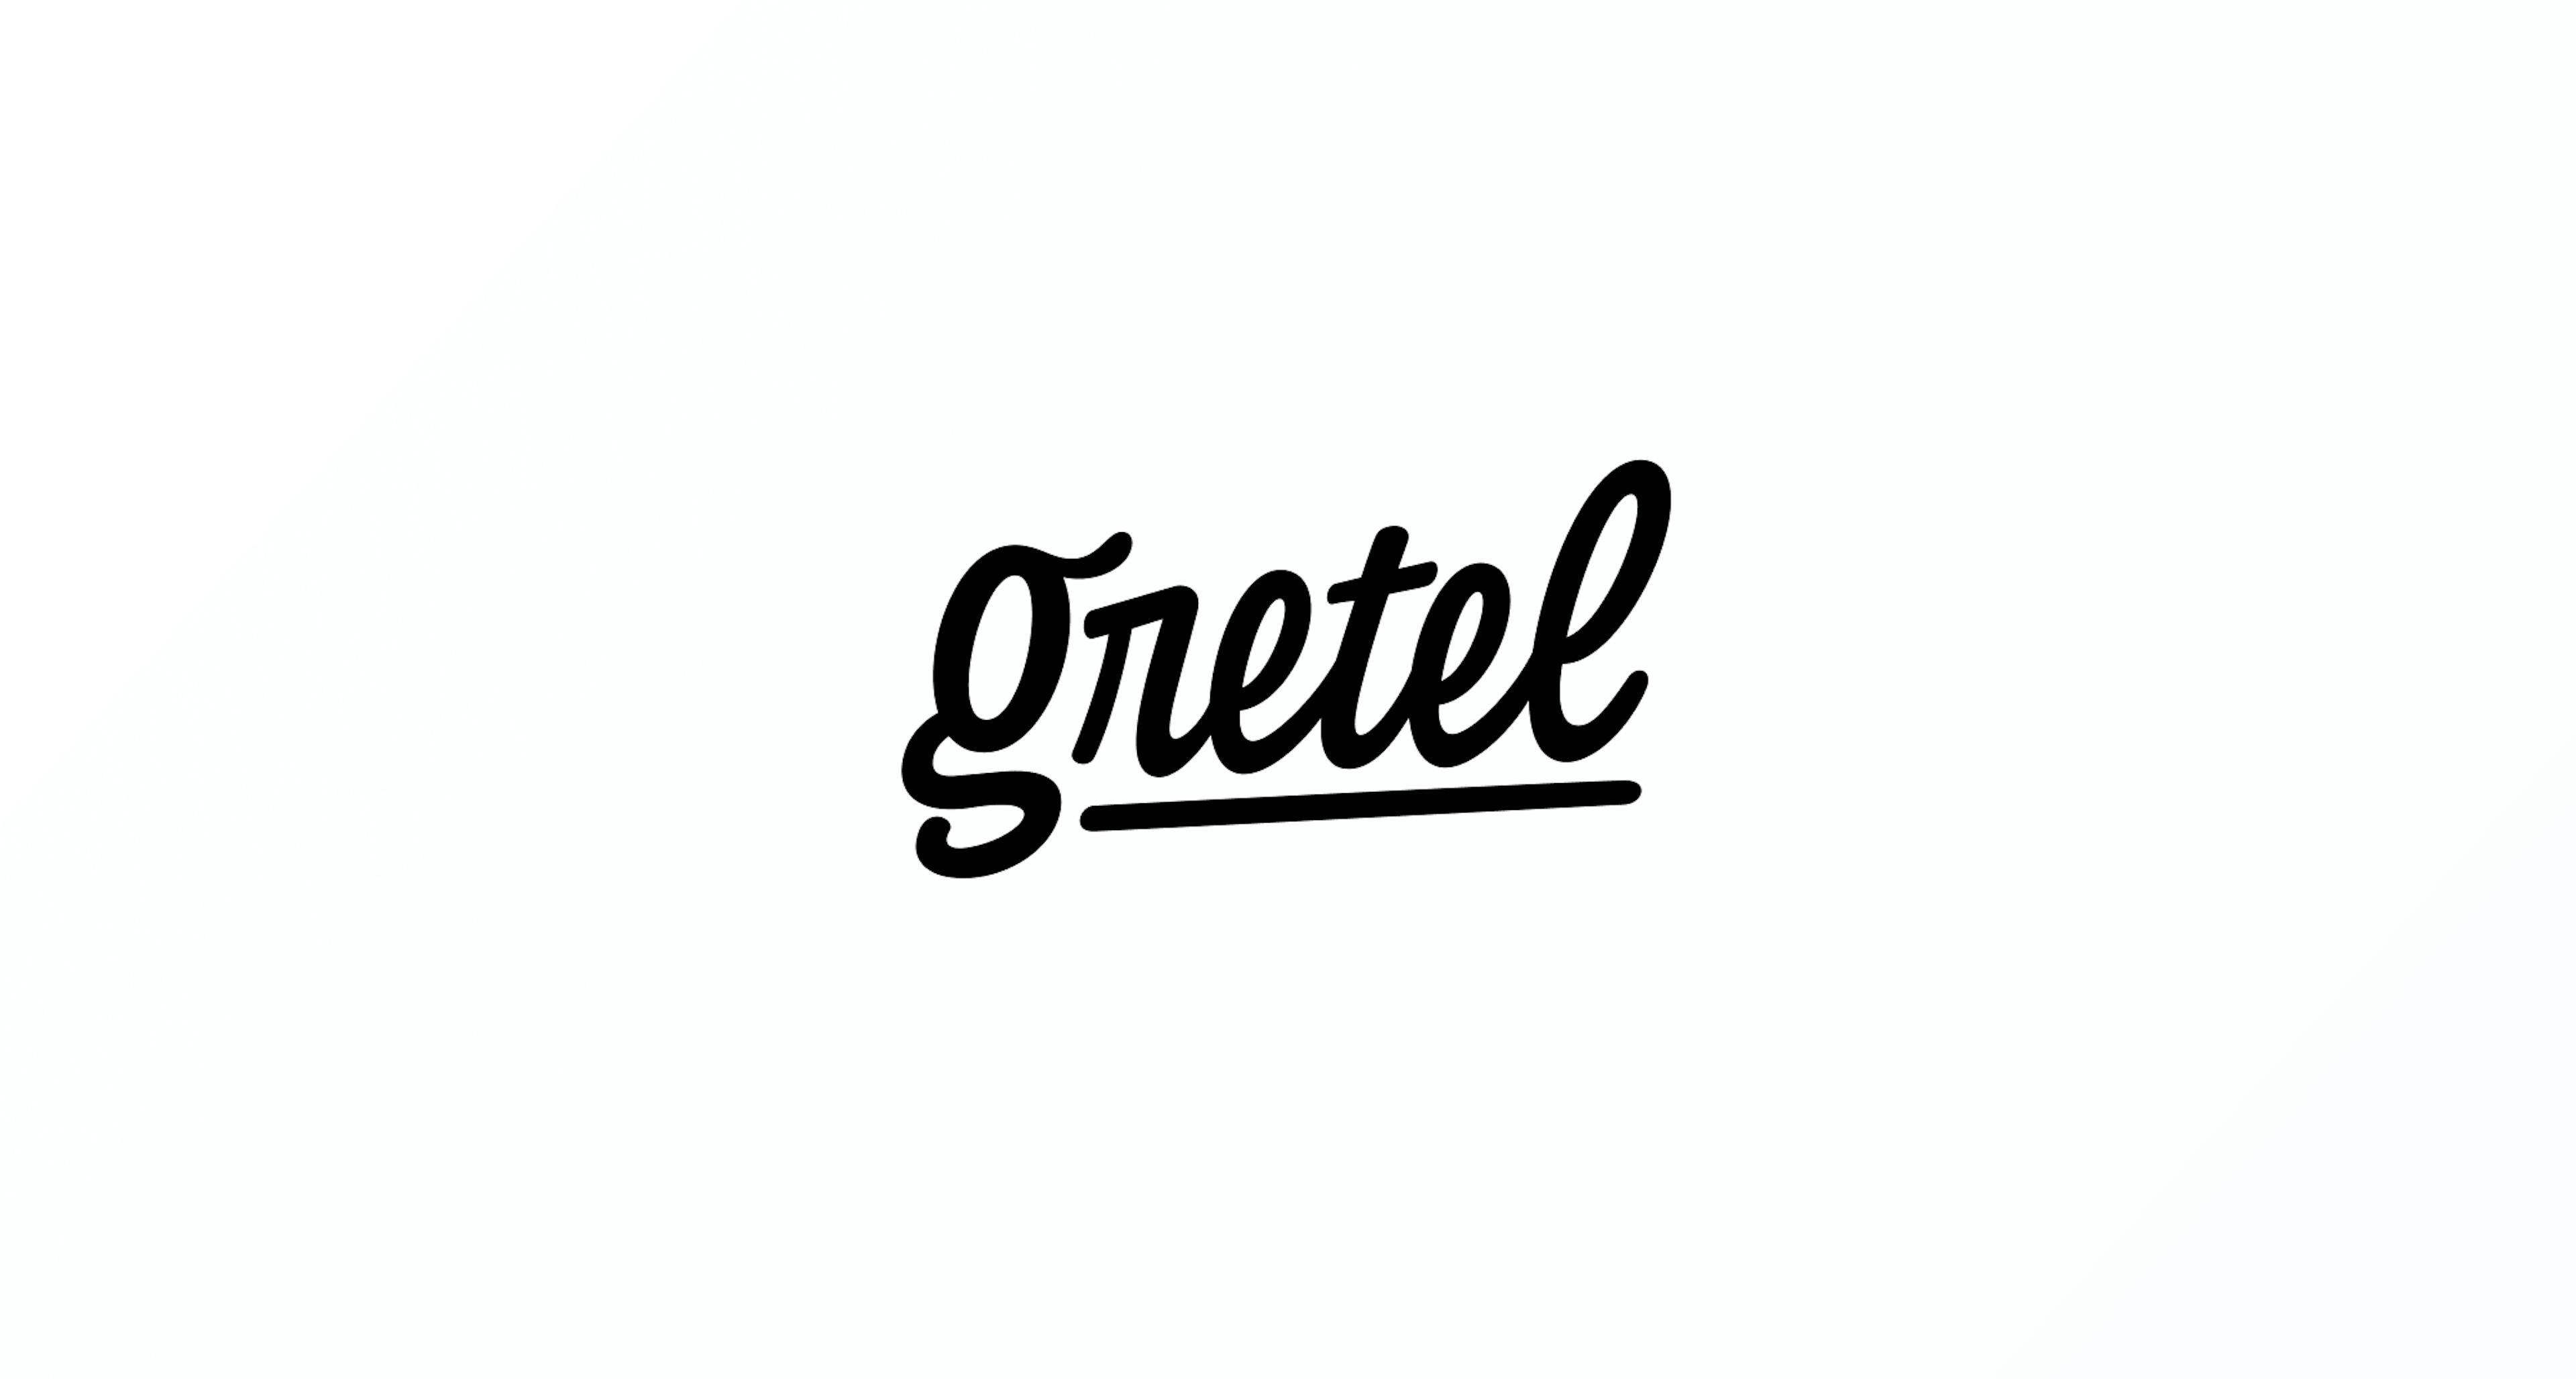 Gretel logo wordmark